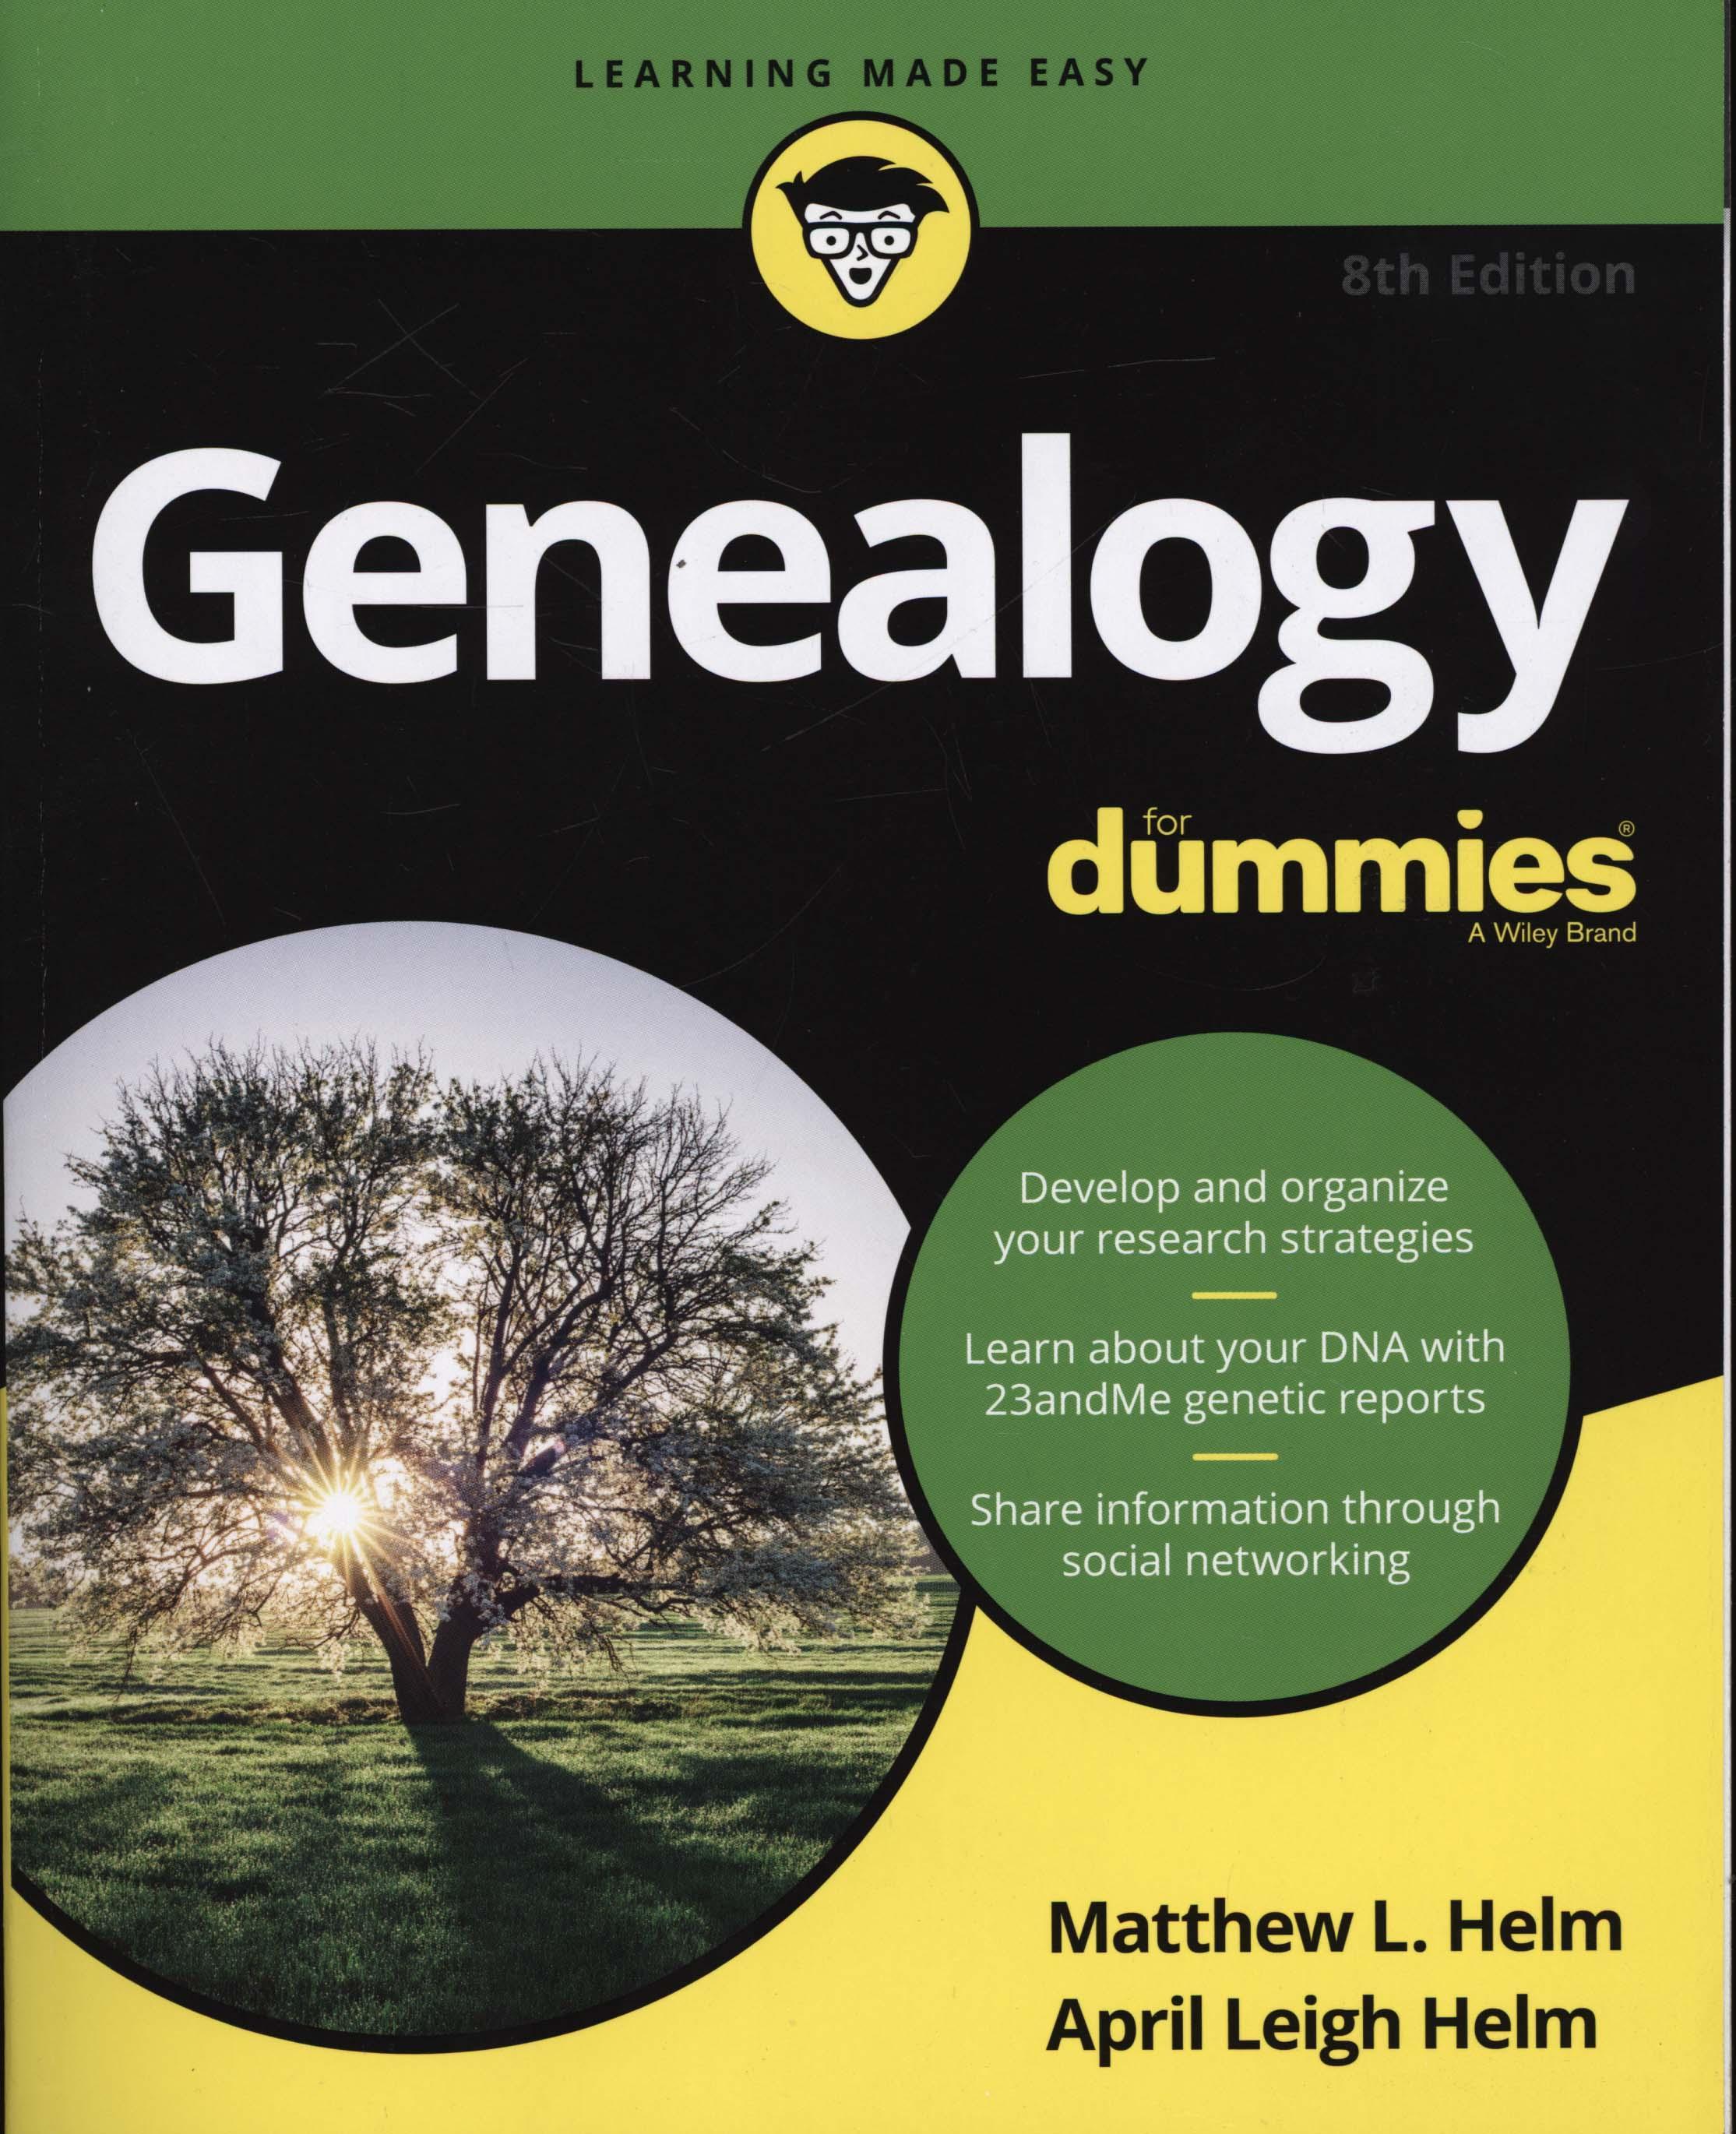 Genealogy For Dummies